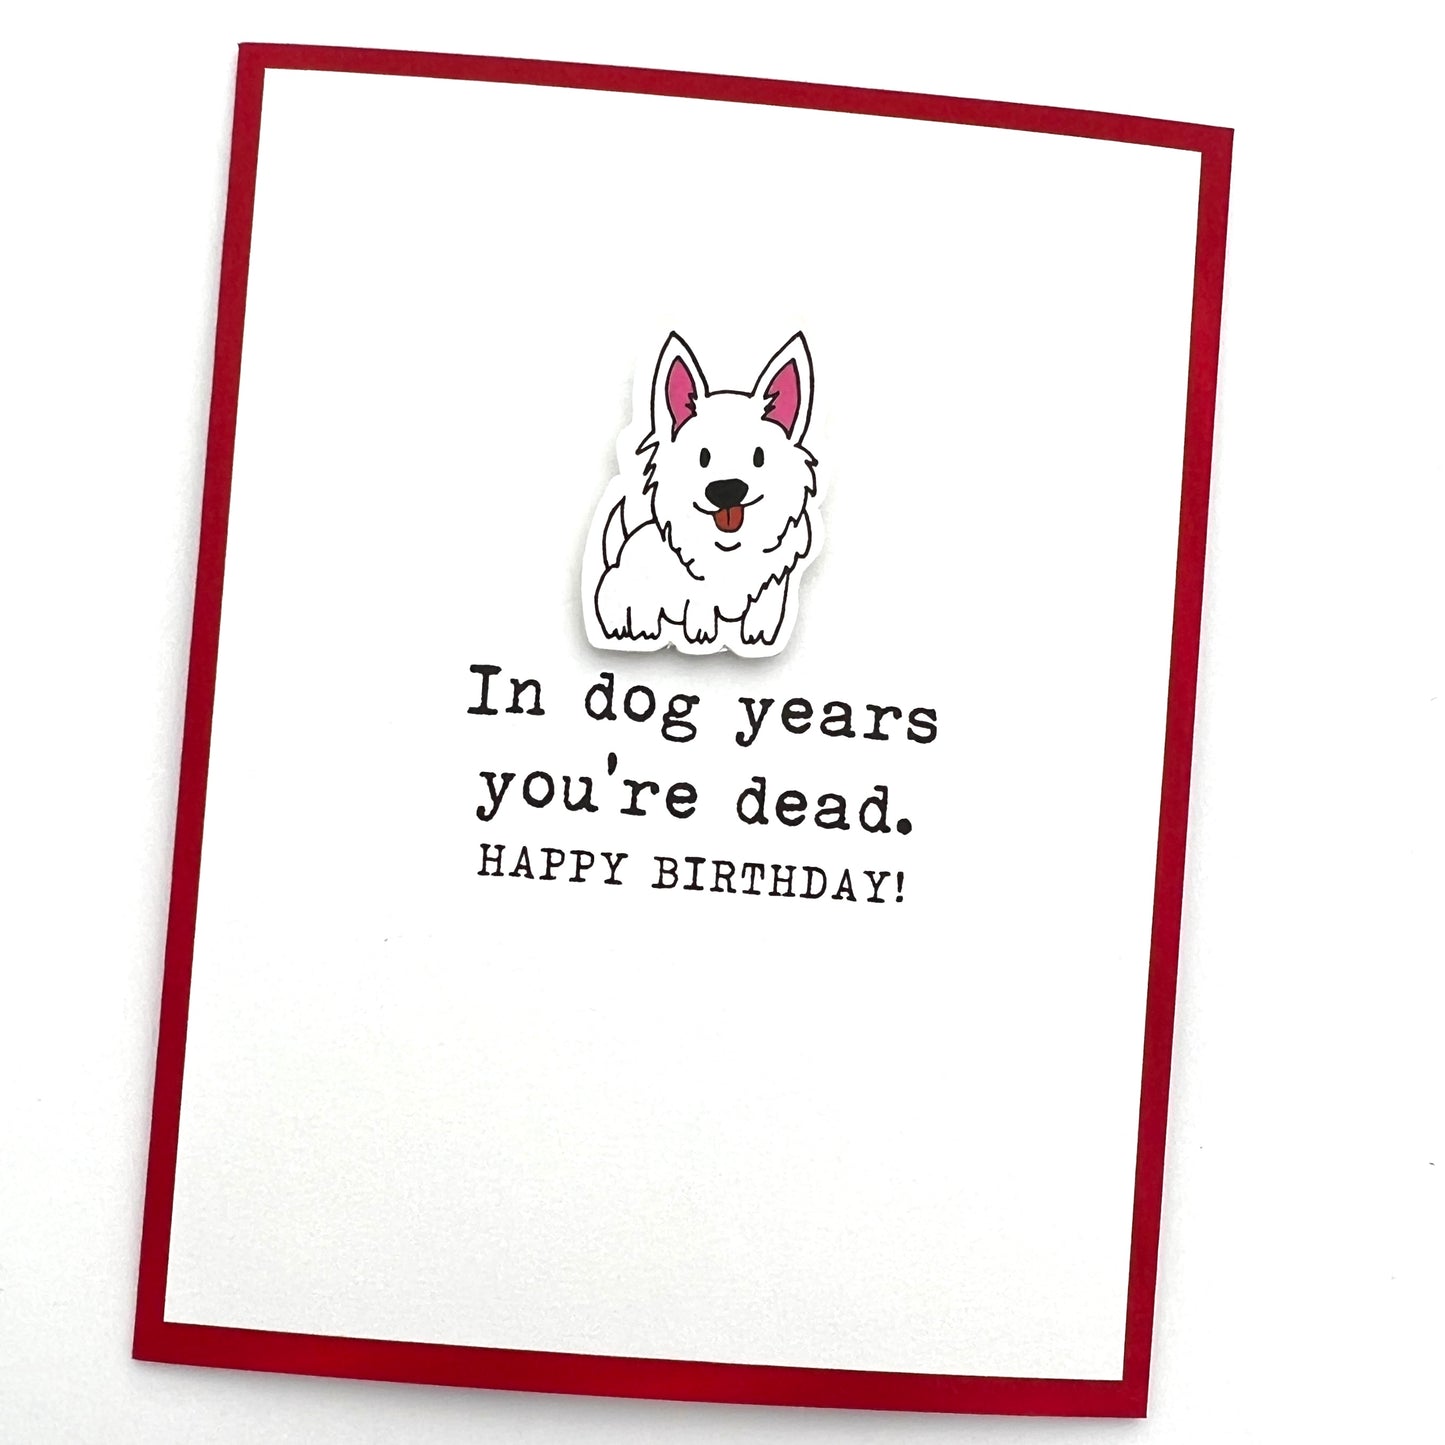 Dog Years Dead card